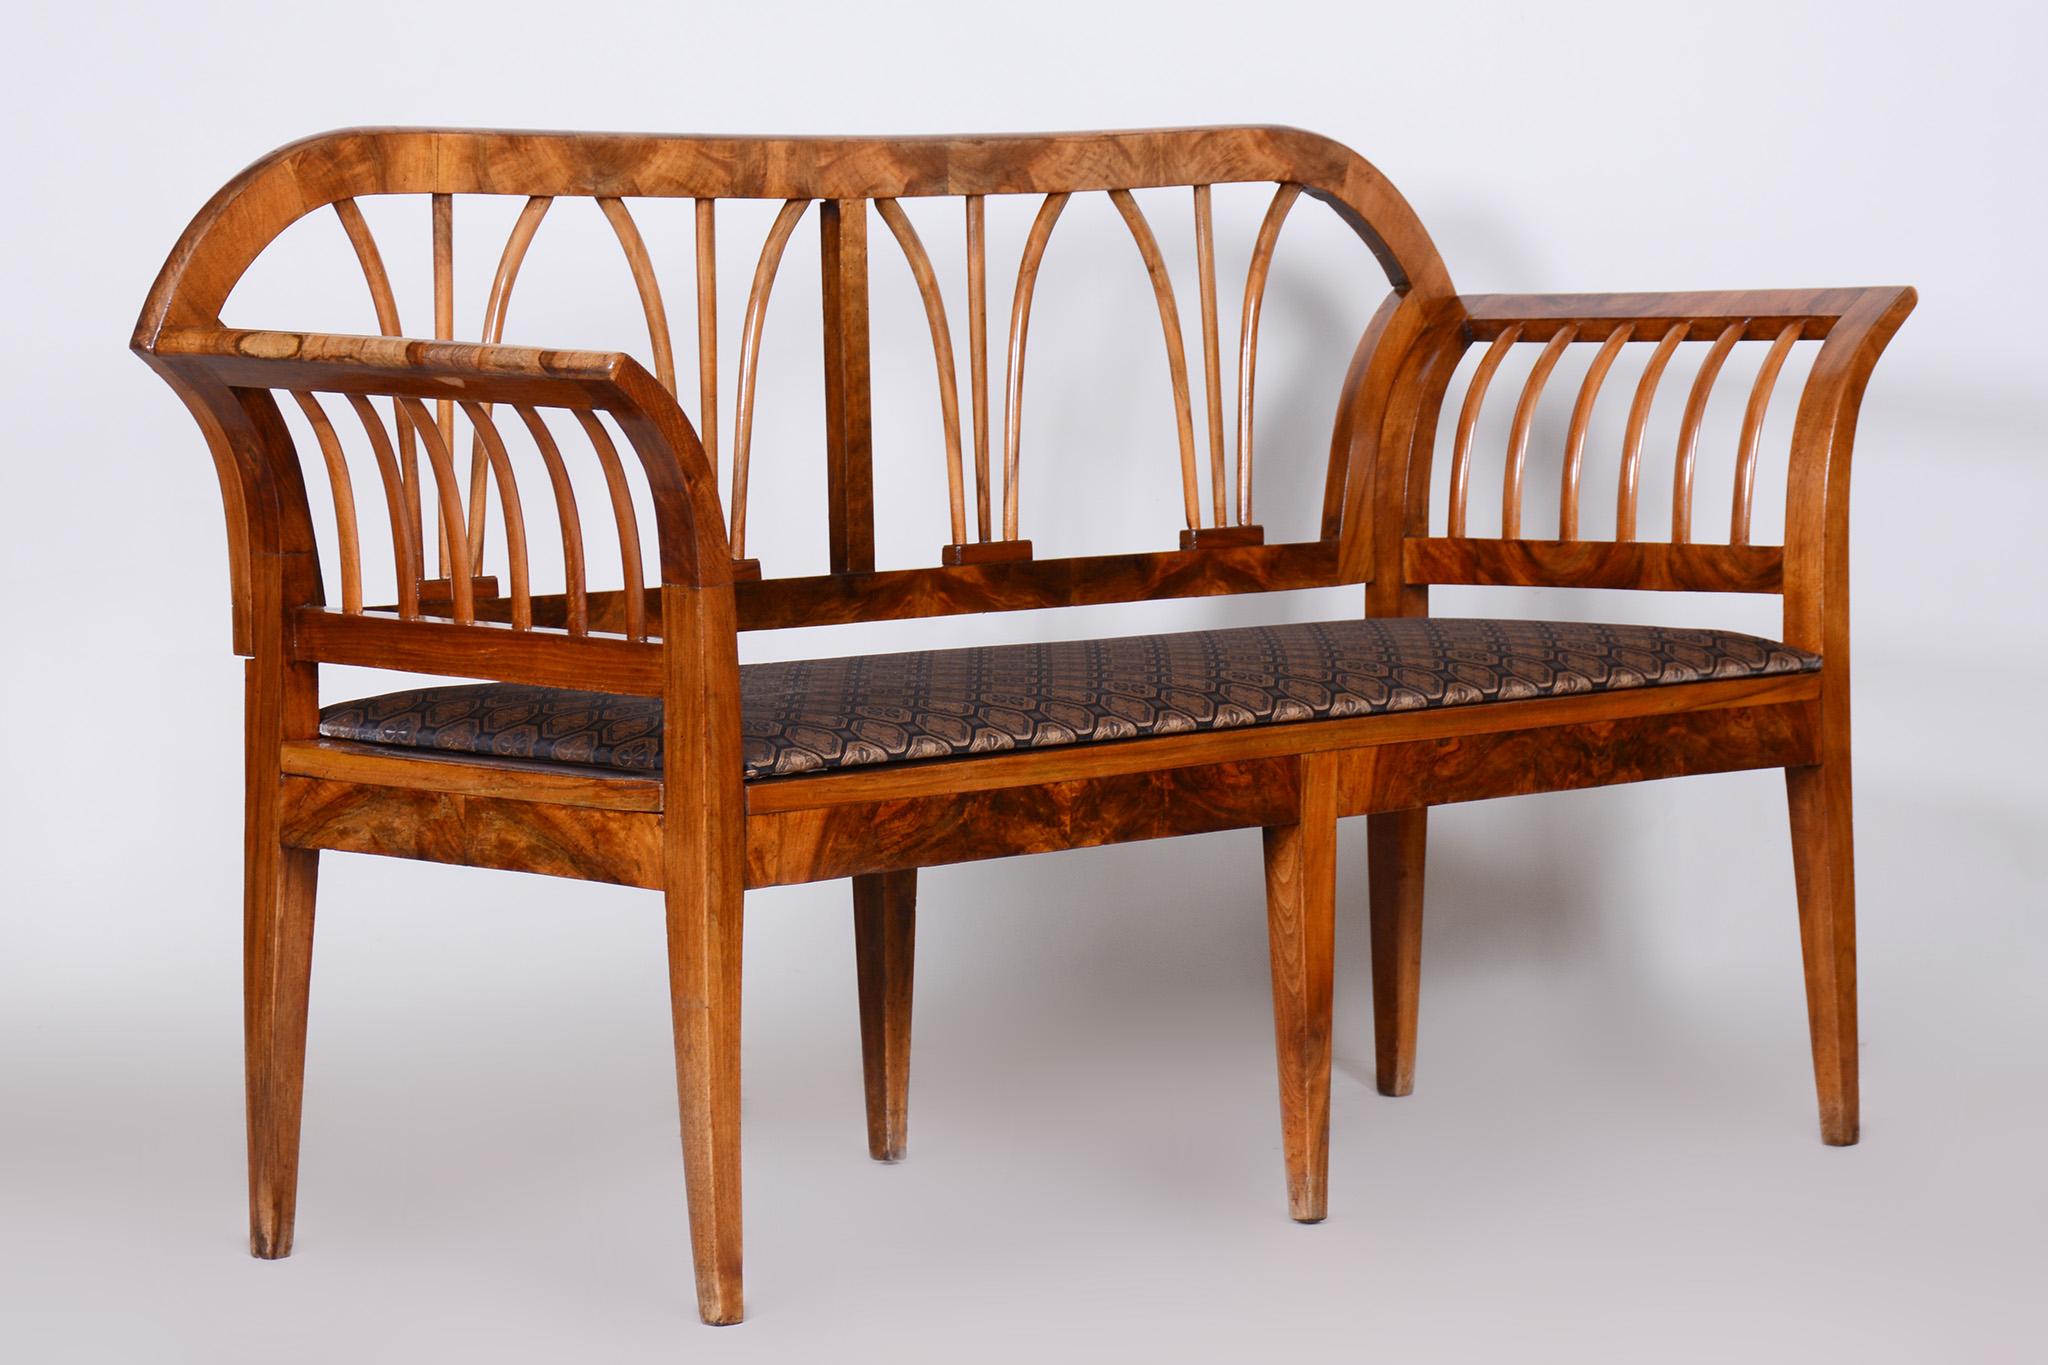 Restored Biedermeier Walnut Sofa, New Upholstery, Rattan Strings, Austria, 1820s In Good Condition For Sale In Horomerice, CZ